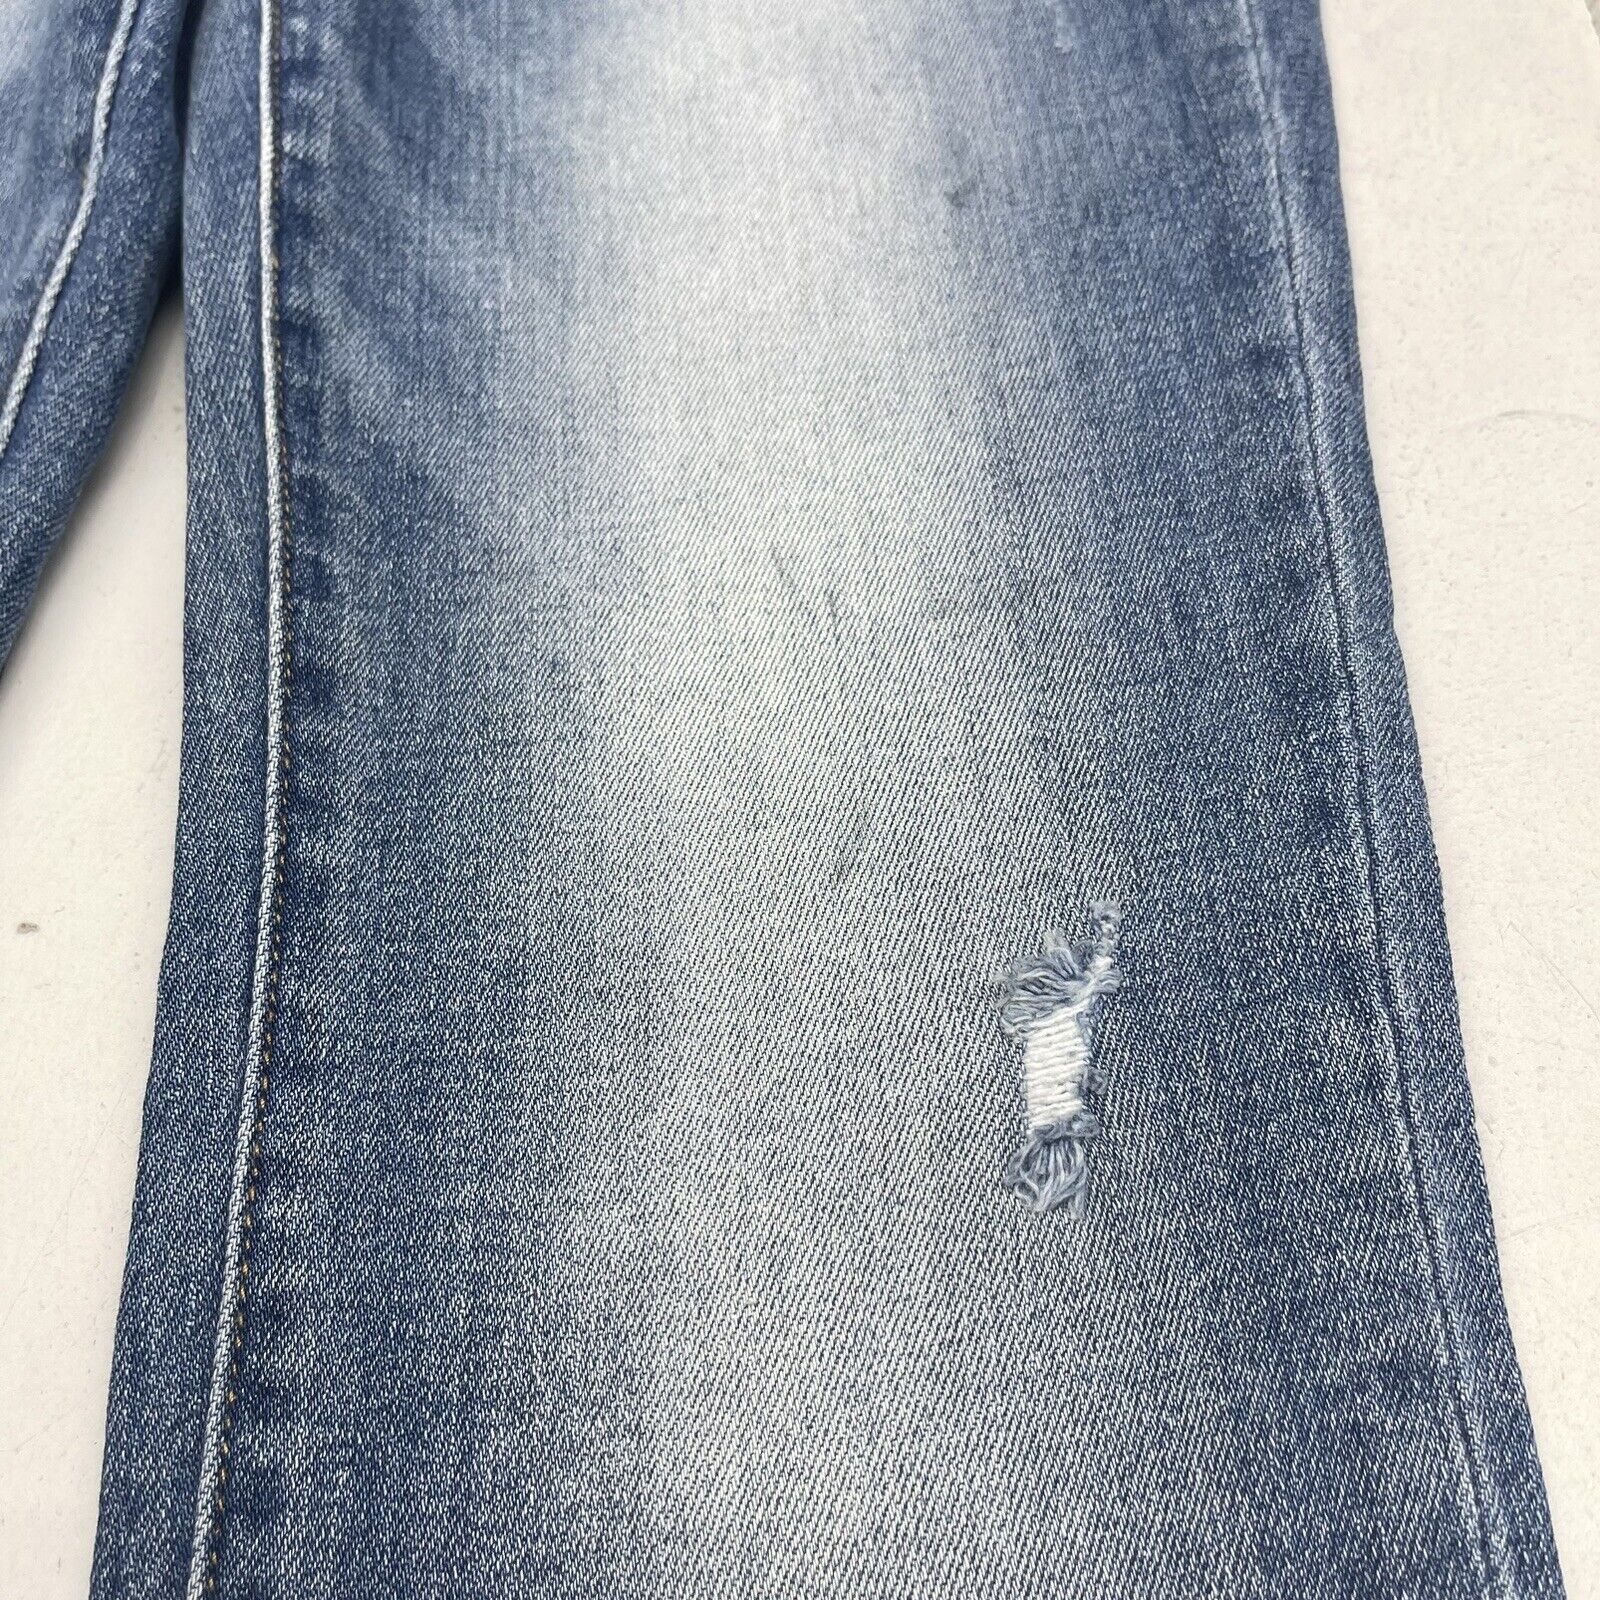 Risen Blue High Rise Distressed Girlfriend Jeans Women's Size 9/29